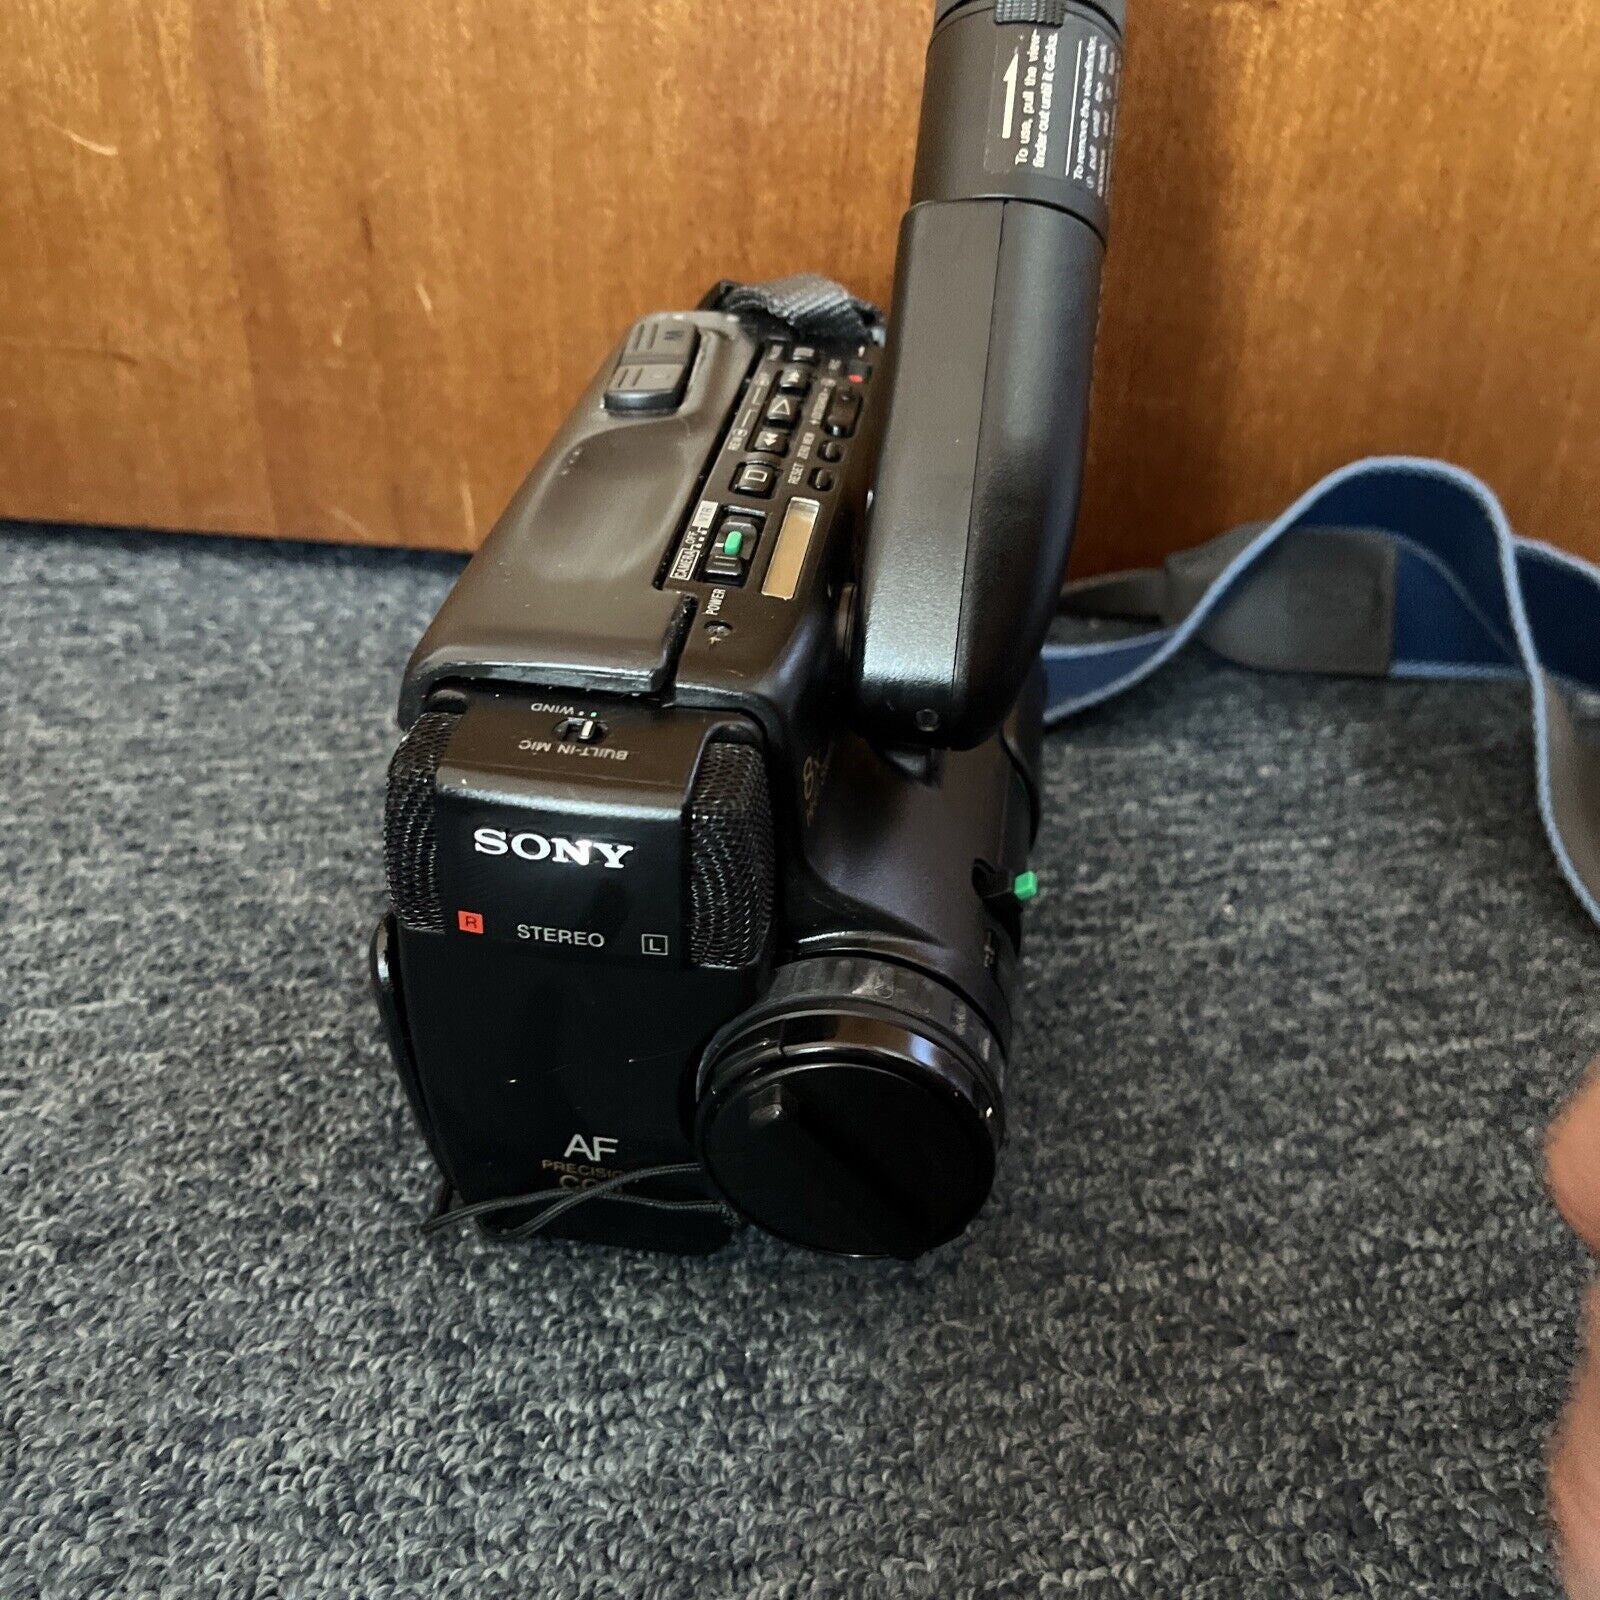 Sony Handycam Video 8 – CCD TR7